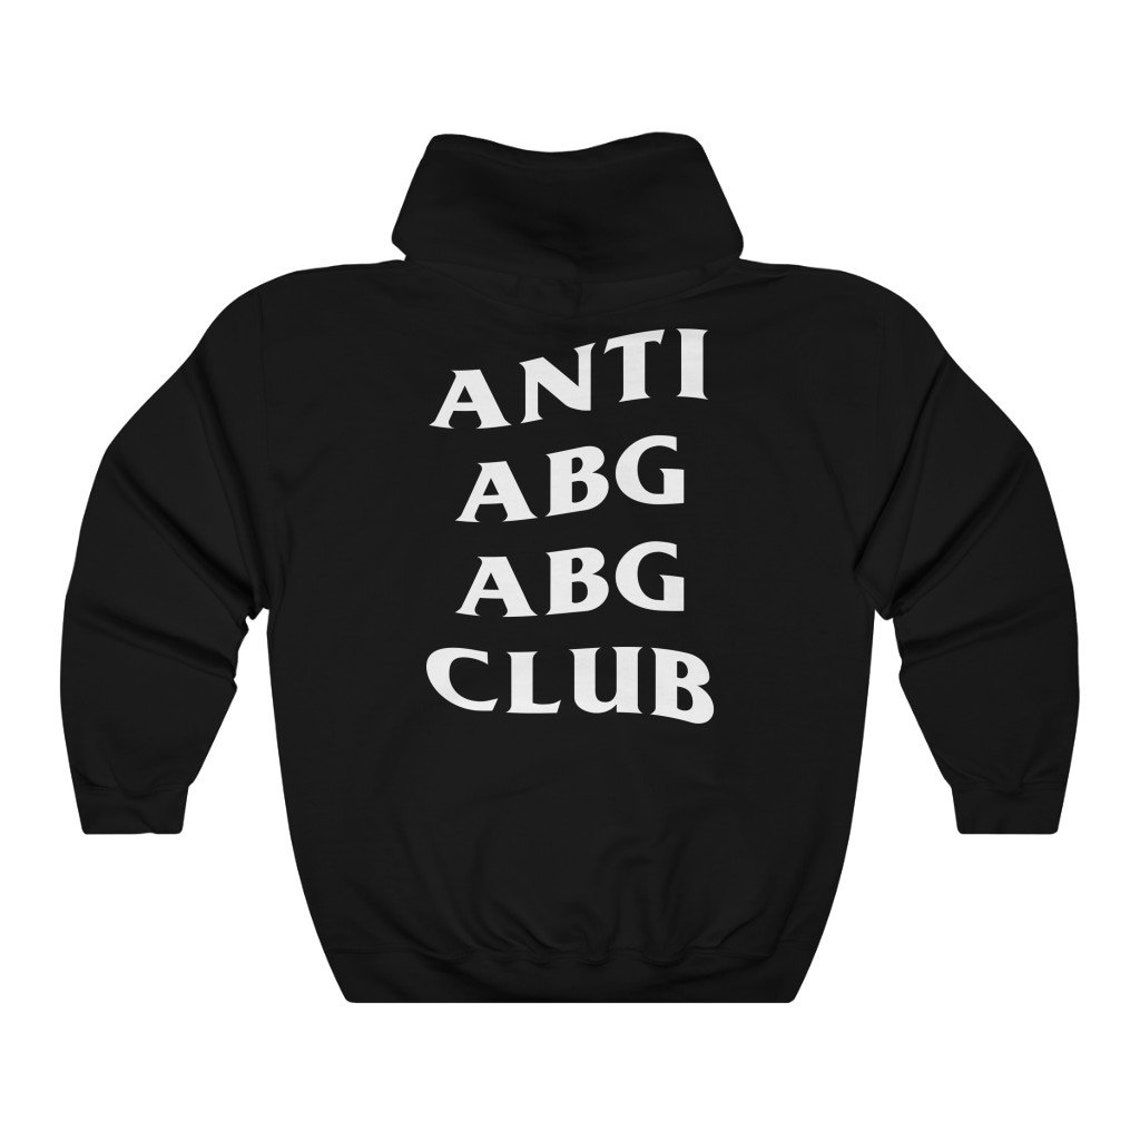 Anti ABG ABG Club Hoodie Street Wear Sweater Anti Social | Etsy